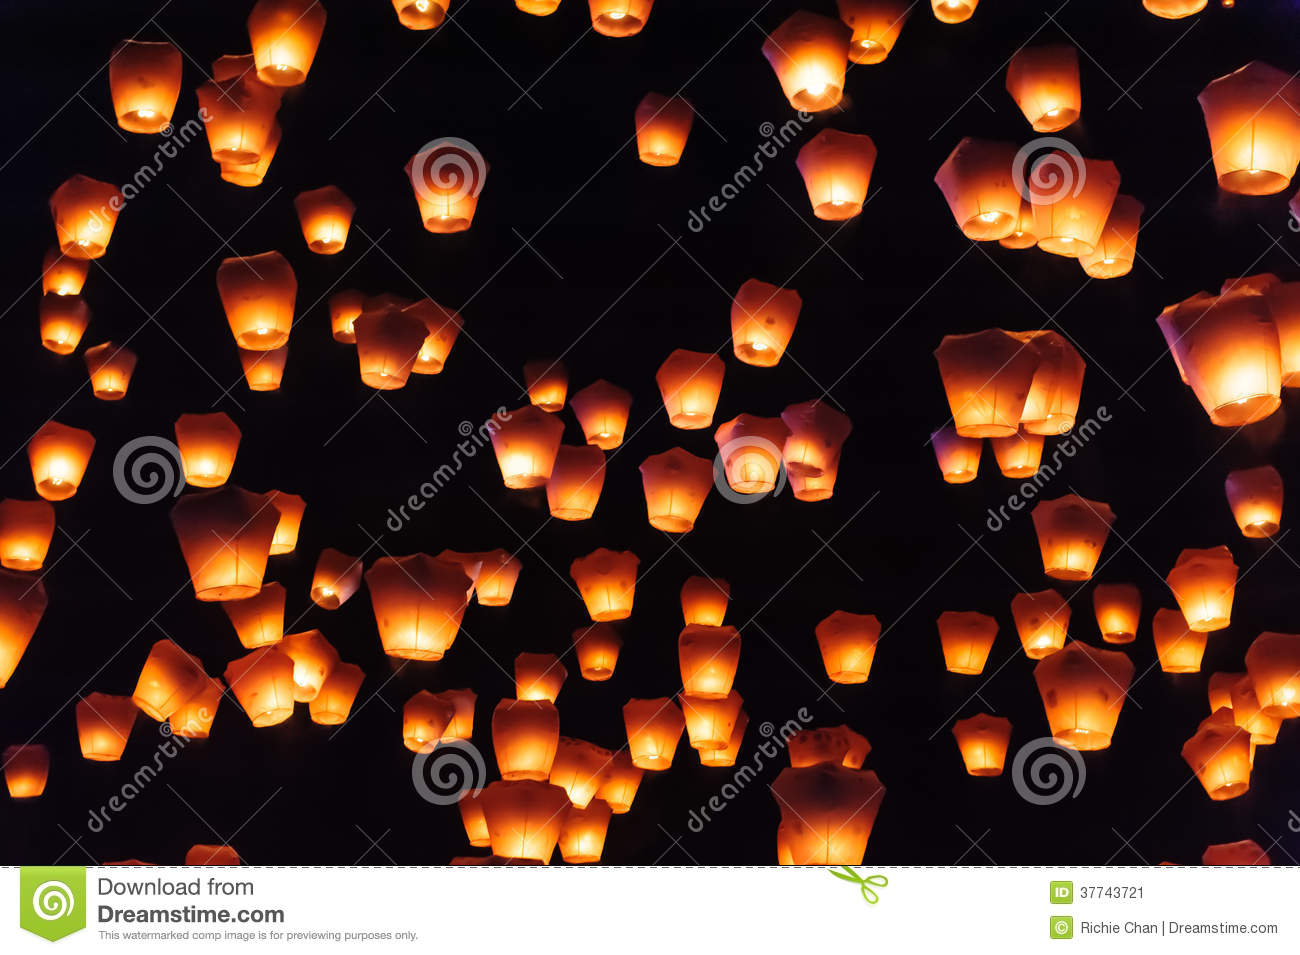 Sky Lanterns In Lantern Festival Stock Image   Image  37743721